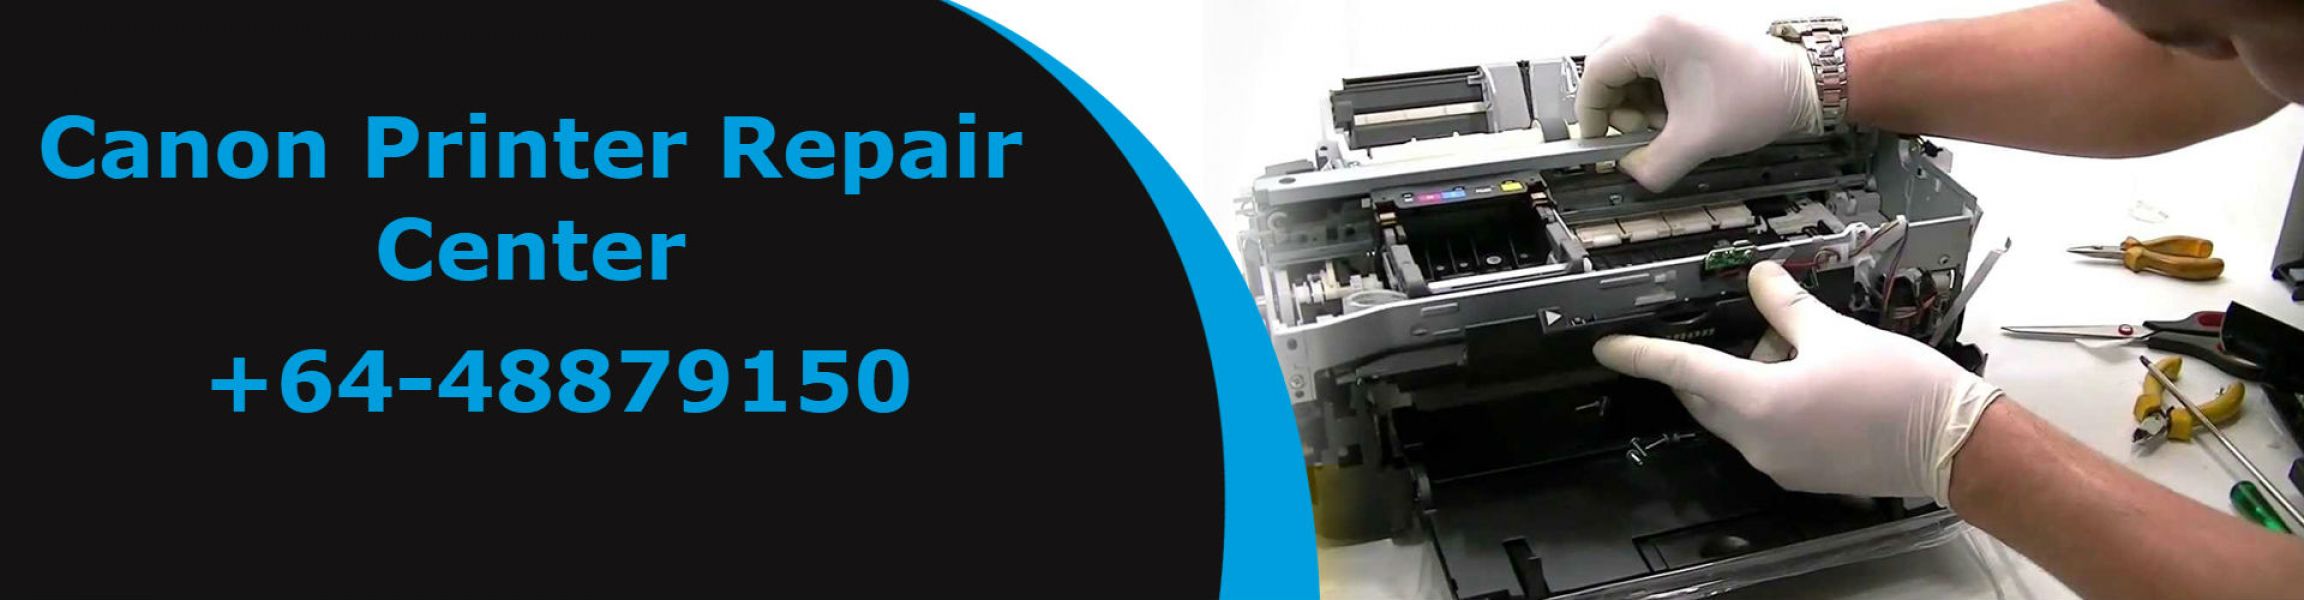 Canon Printer Repair Center New Zealand Number +64-48879150